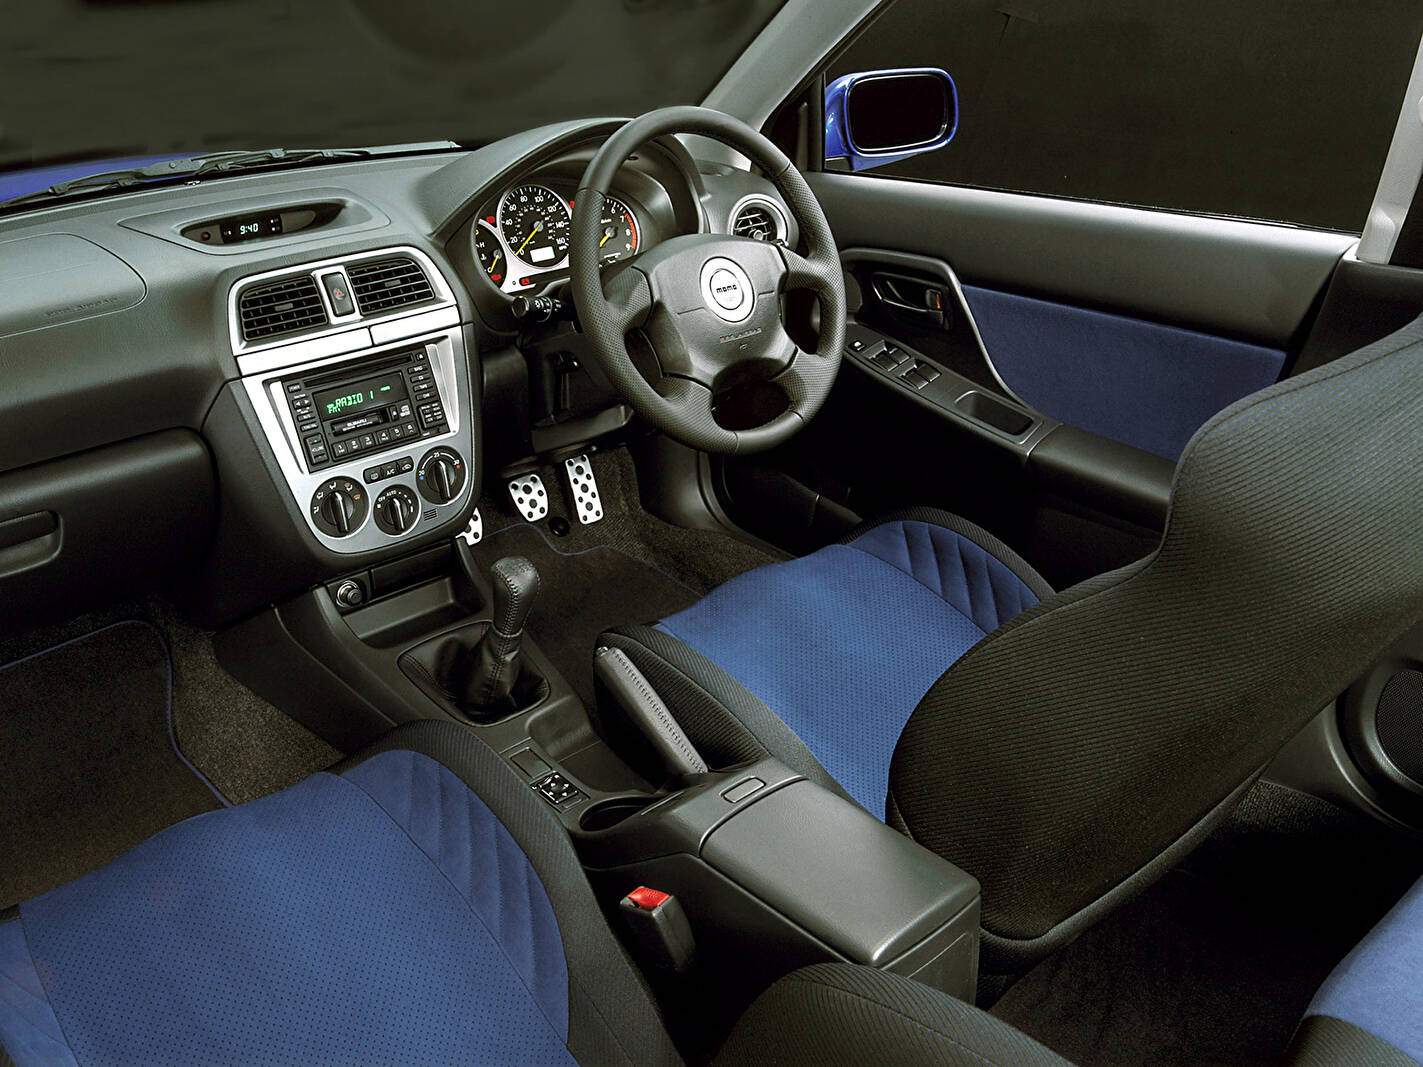 Subaru Impreza II WRX « UK300 » (2001),  ajouté par fox58